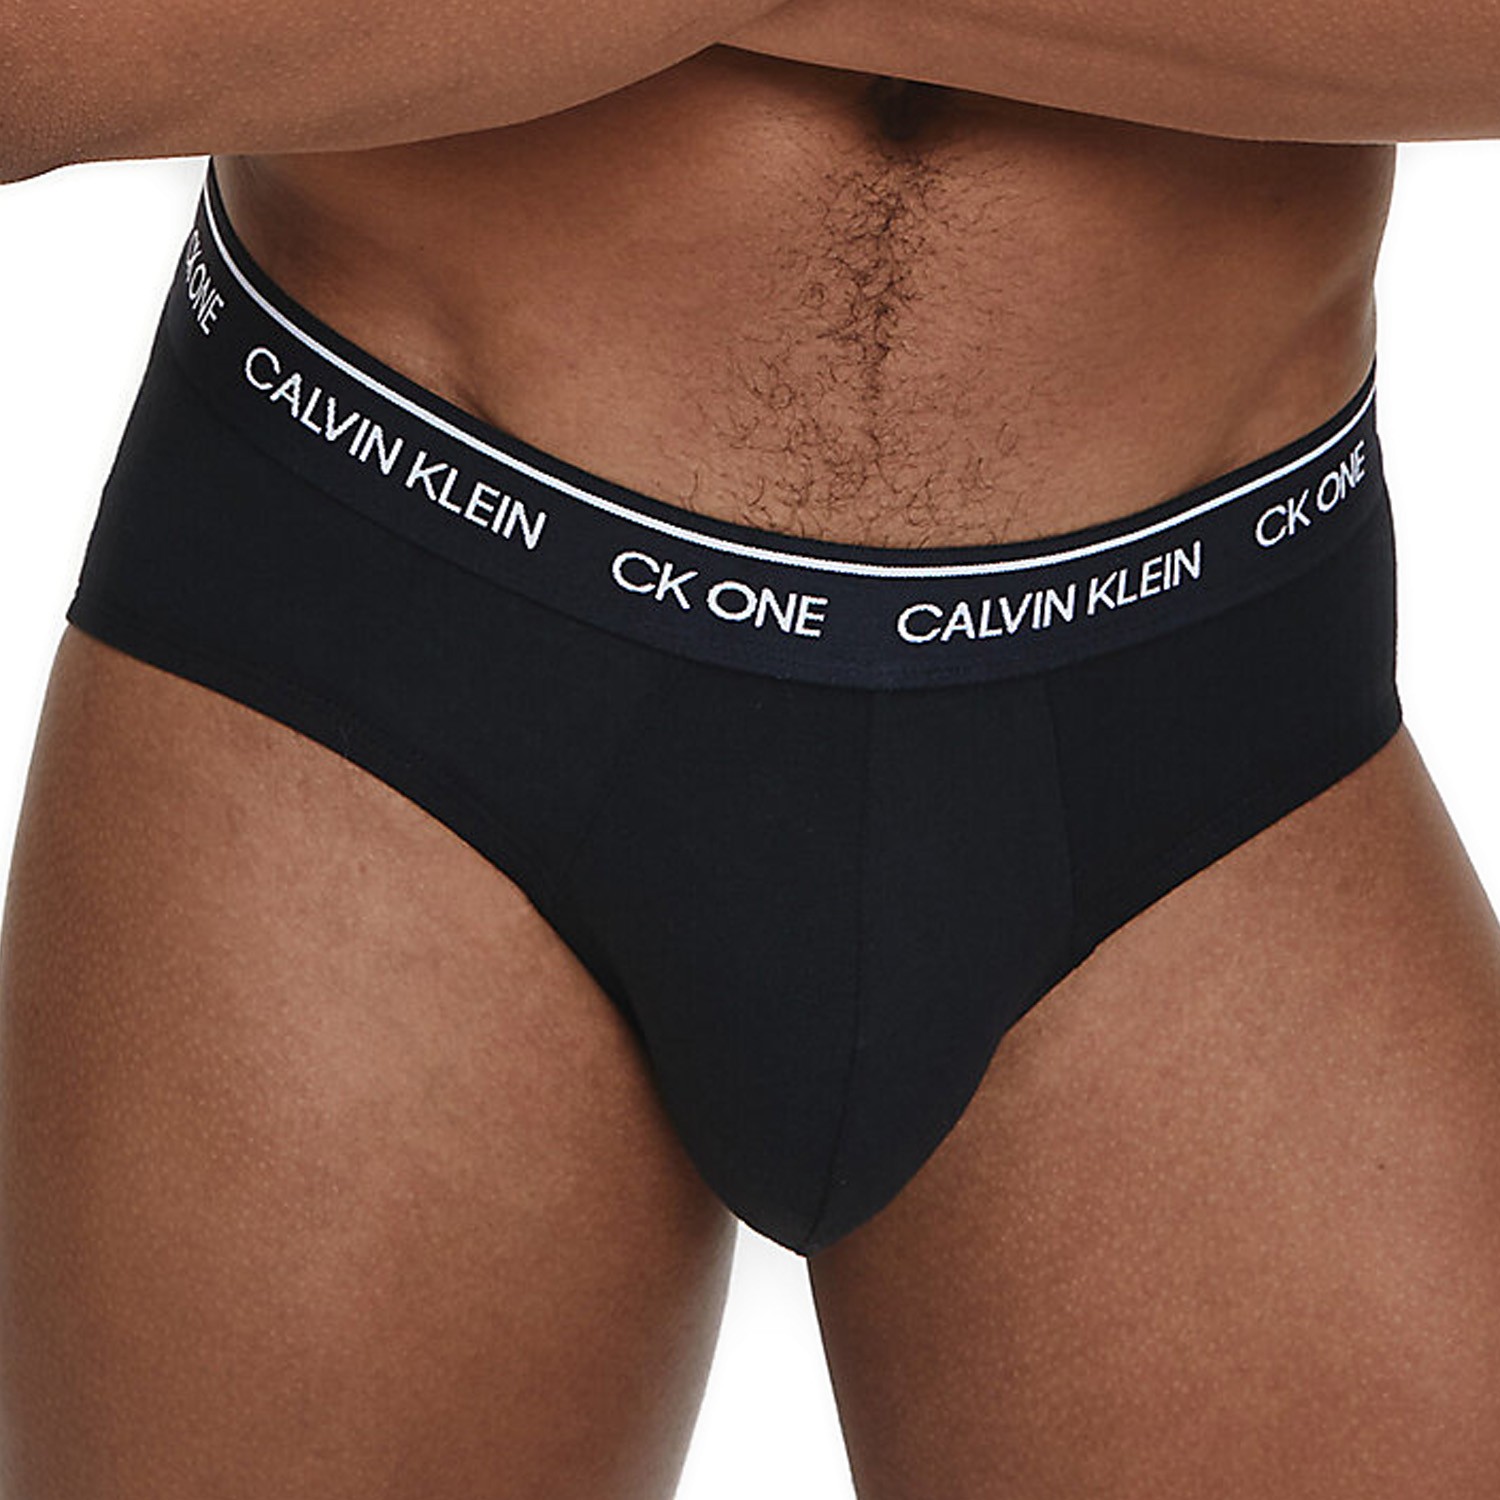 Slip - CK ONE PRIDE black - Calvin Klein : sale of Brief for men Ca